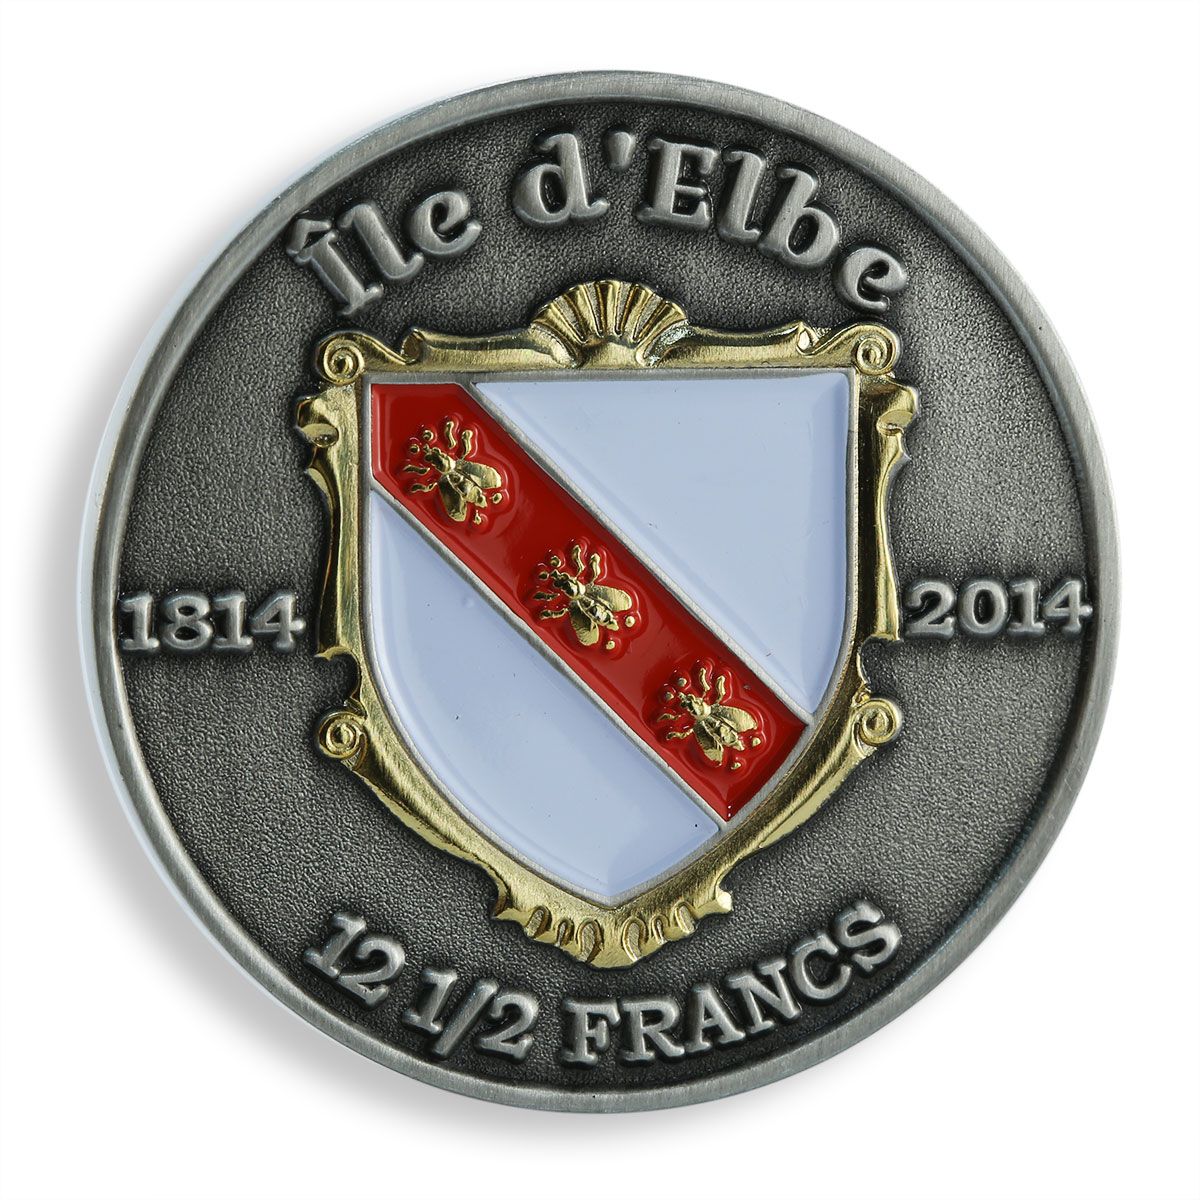 Elba 12 1/2 francs Napoleon 200th Anniversary of the Fontainebleau Treaty 2014